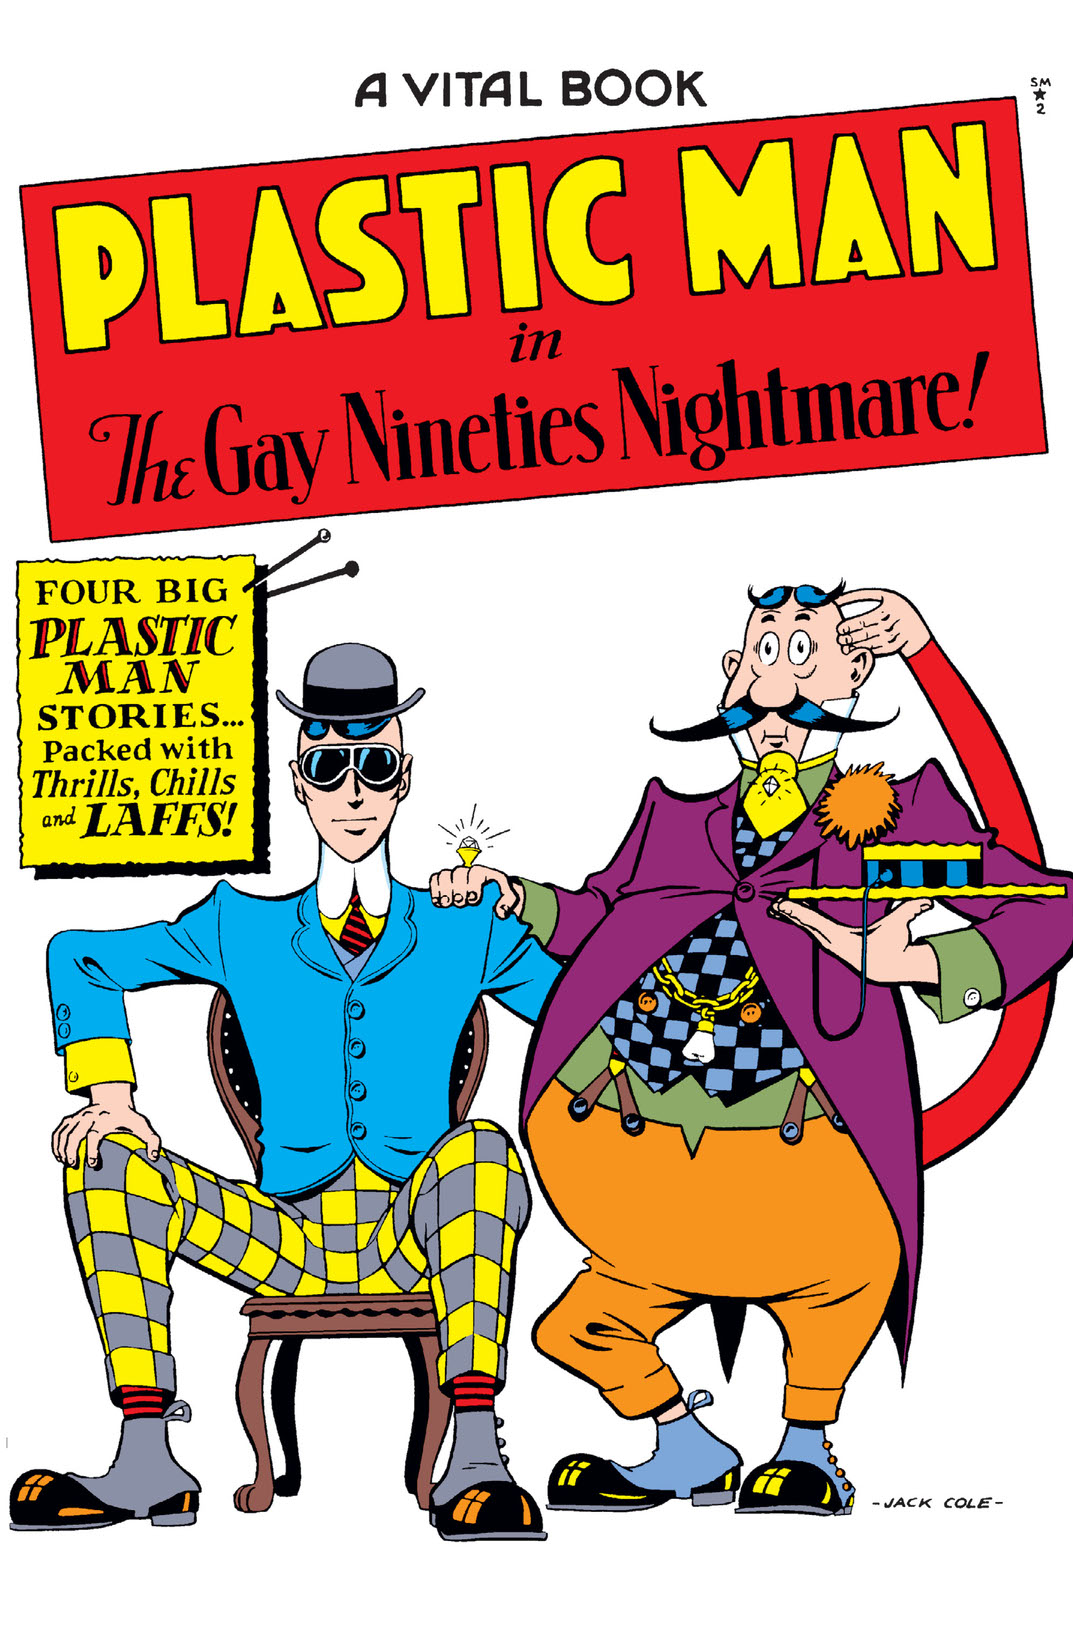 Plastic Man (1943-) #2 preview images